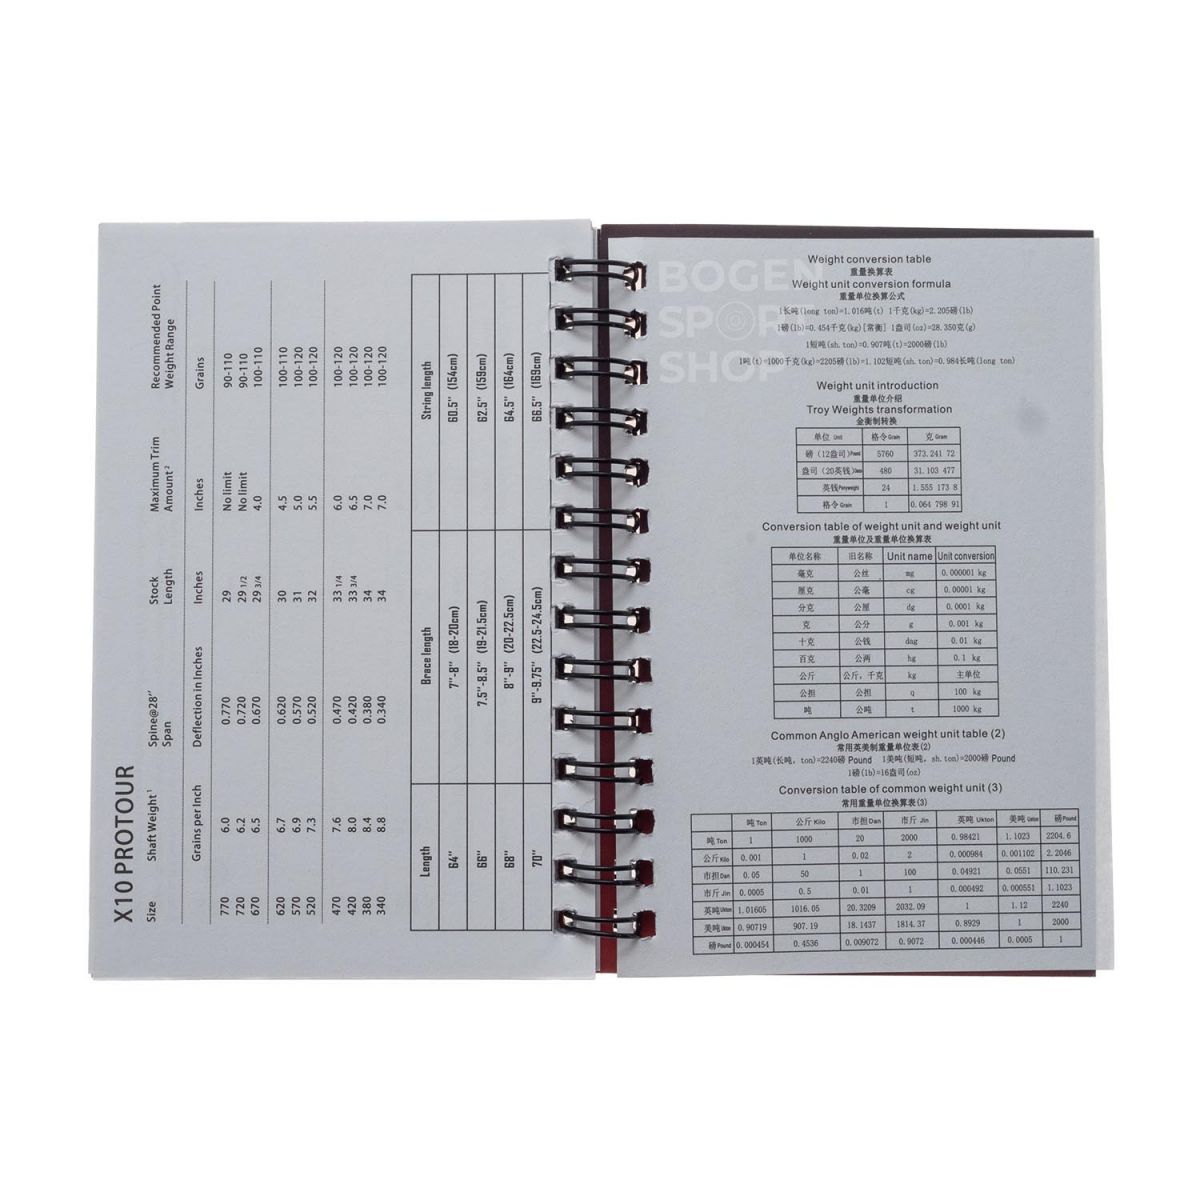 Decut Trainingsbuch Scorebook Rot